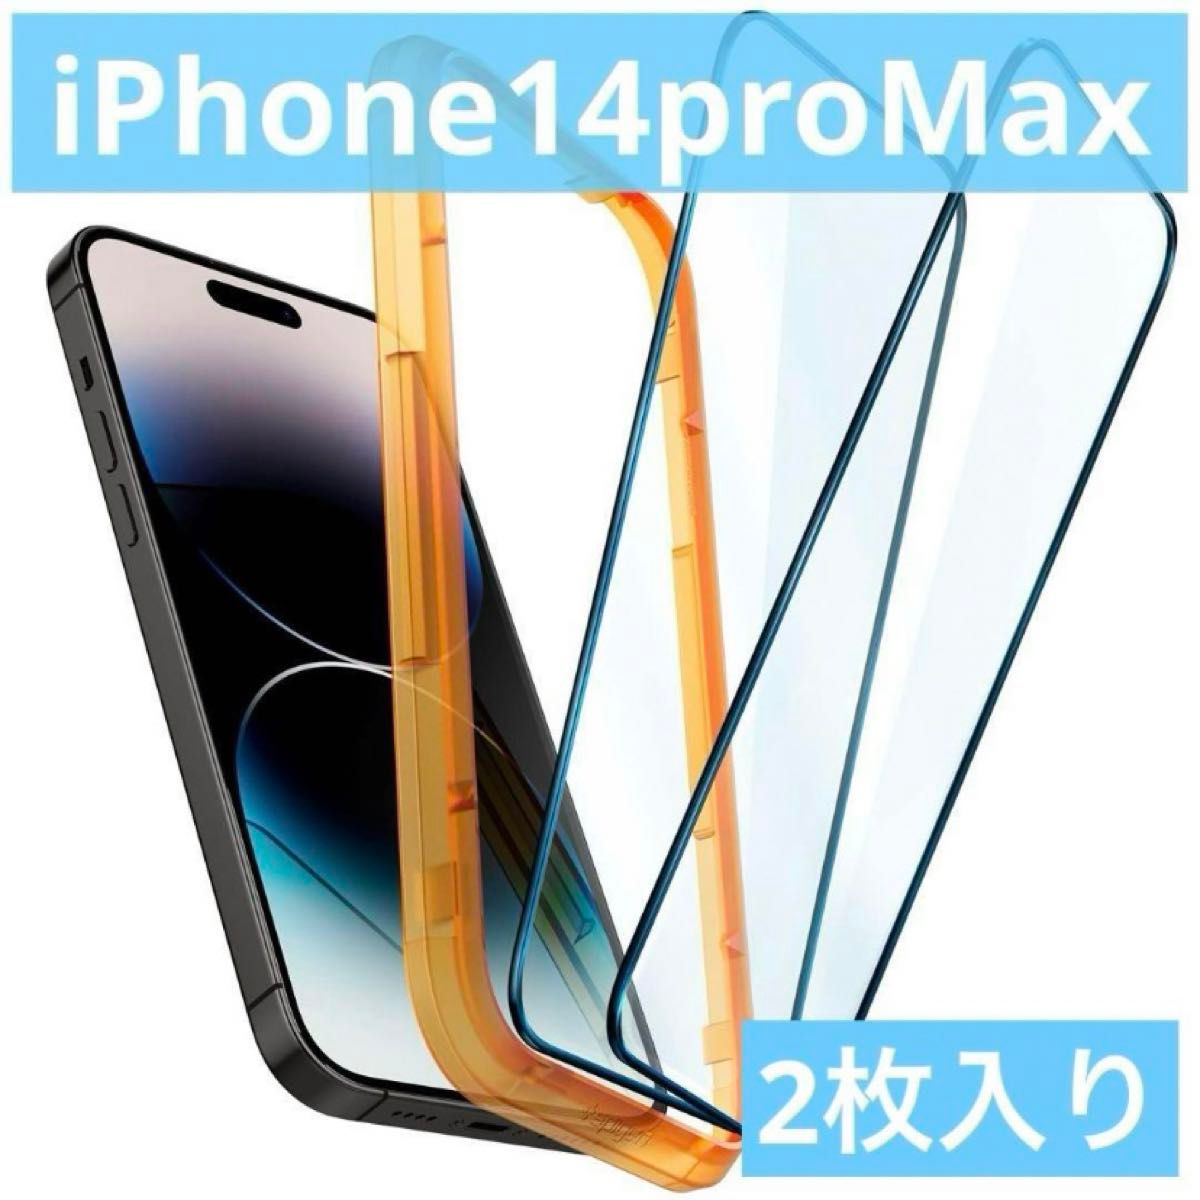 Spigen AlignMaster 全面保護 ガラスフィルム iPhone 14 Pro Max用 ガイド枠付き